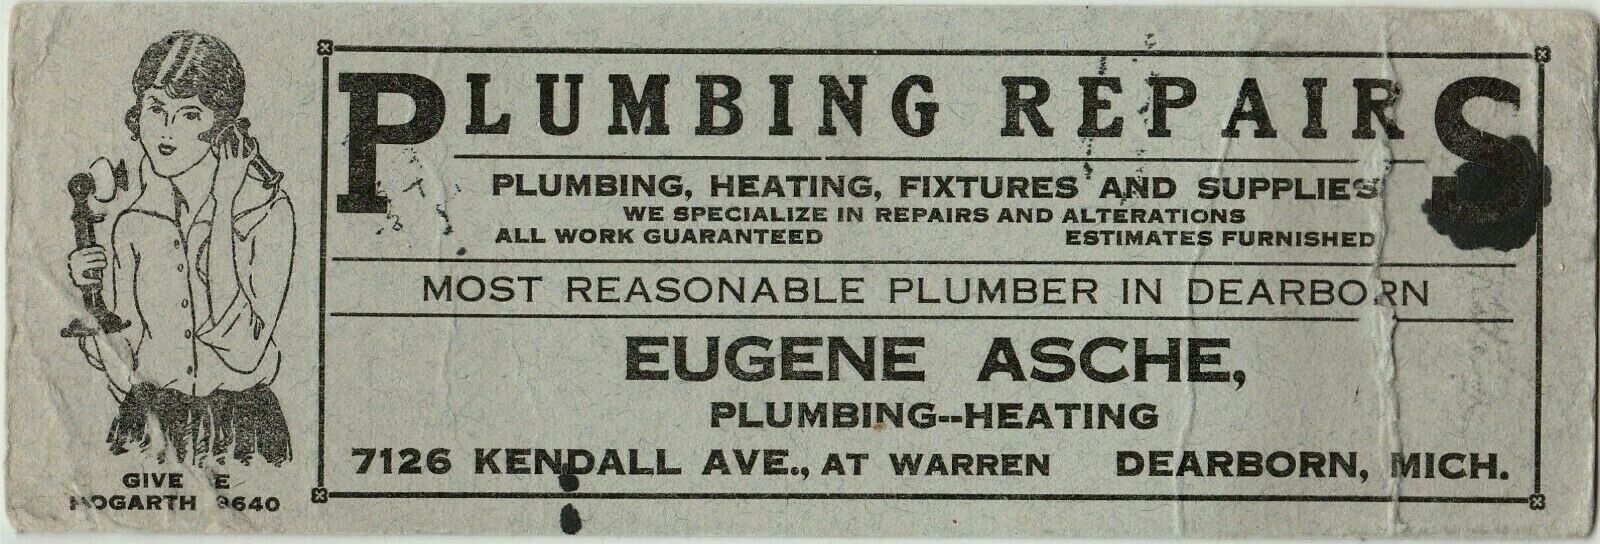 Plumbing & Heating Eugene Asche Trade Card, circa 1920, Dearborn Mich. 